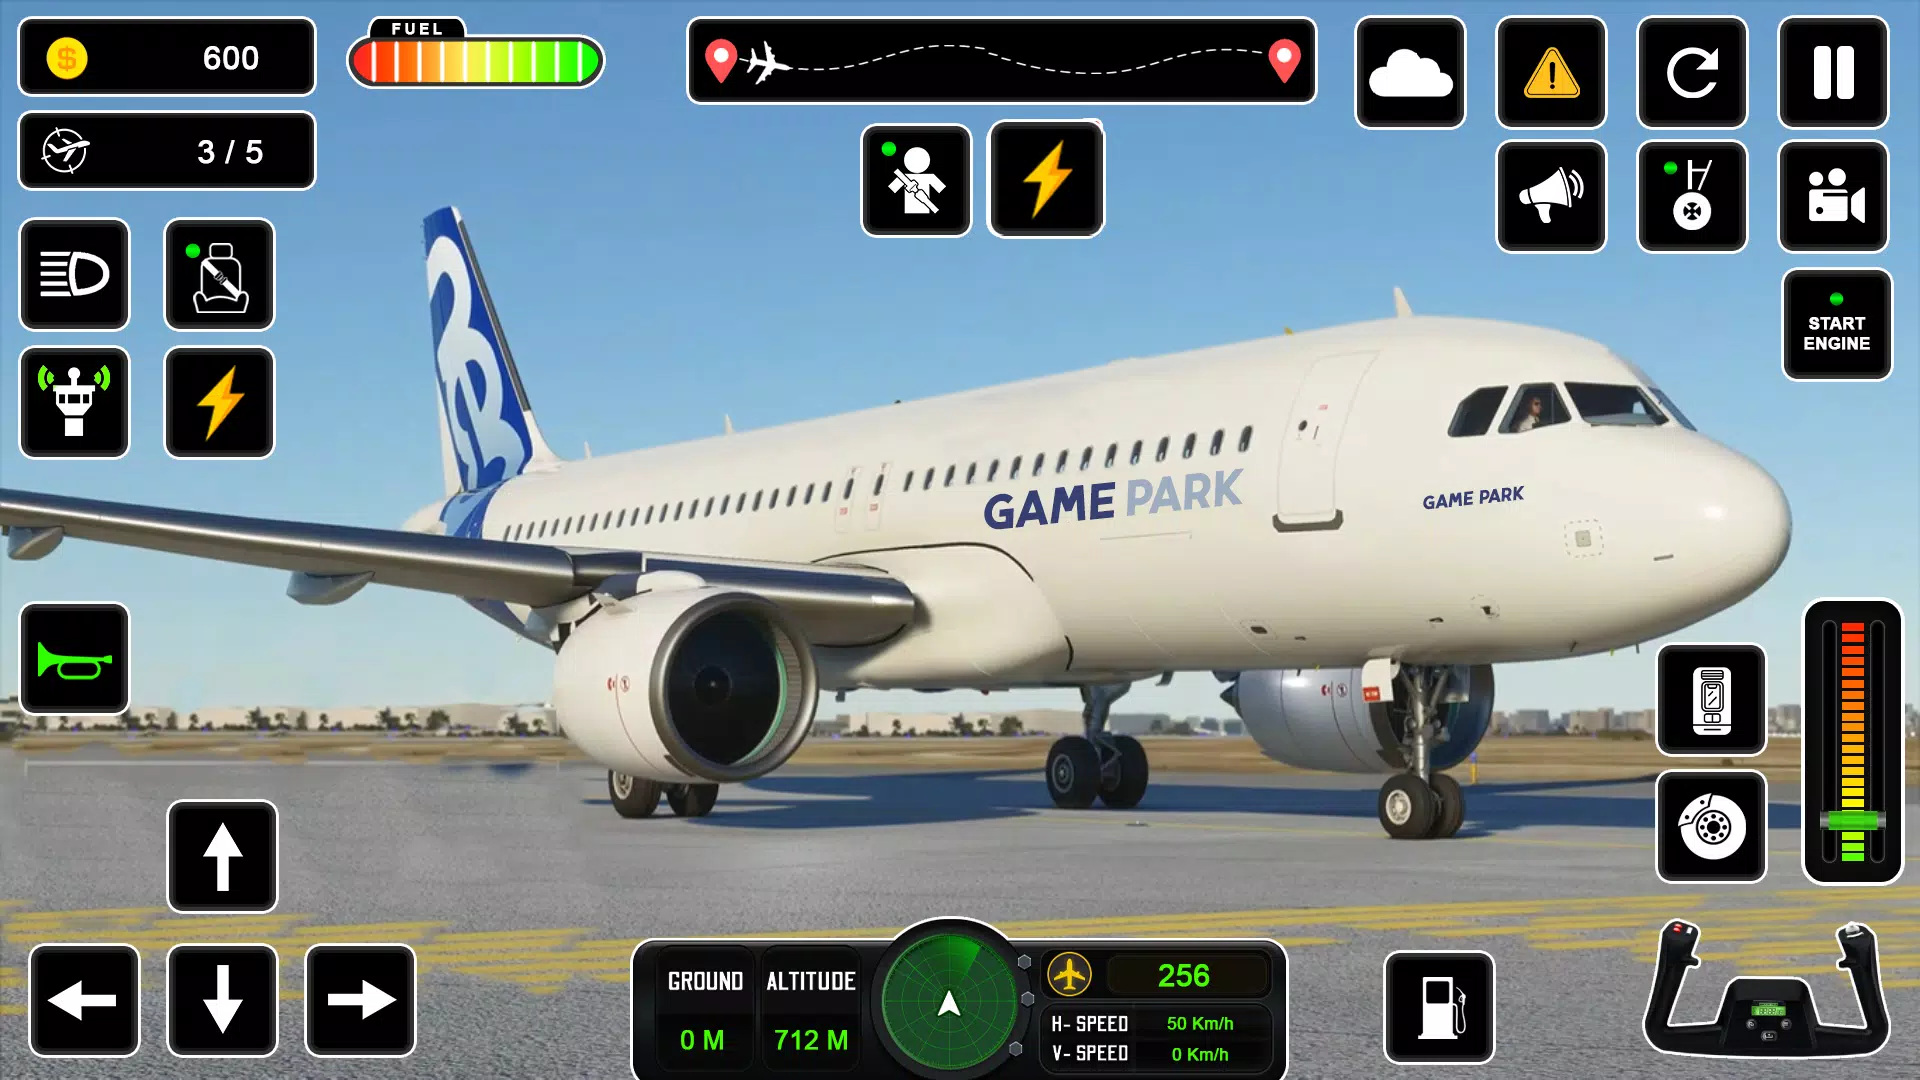 Real Jet Airplane Flight Simulator Plane Flying Apk Download for Android-  Latest version 1.2.20- com.valley.flight.pilot.simulator.flyplane